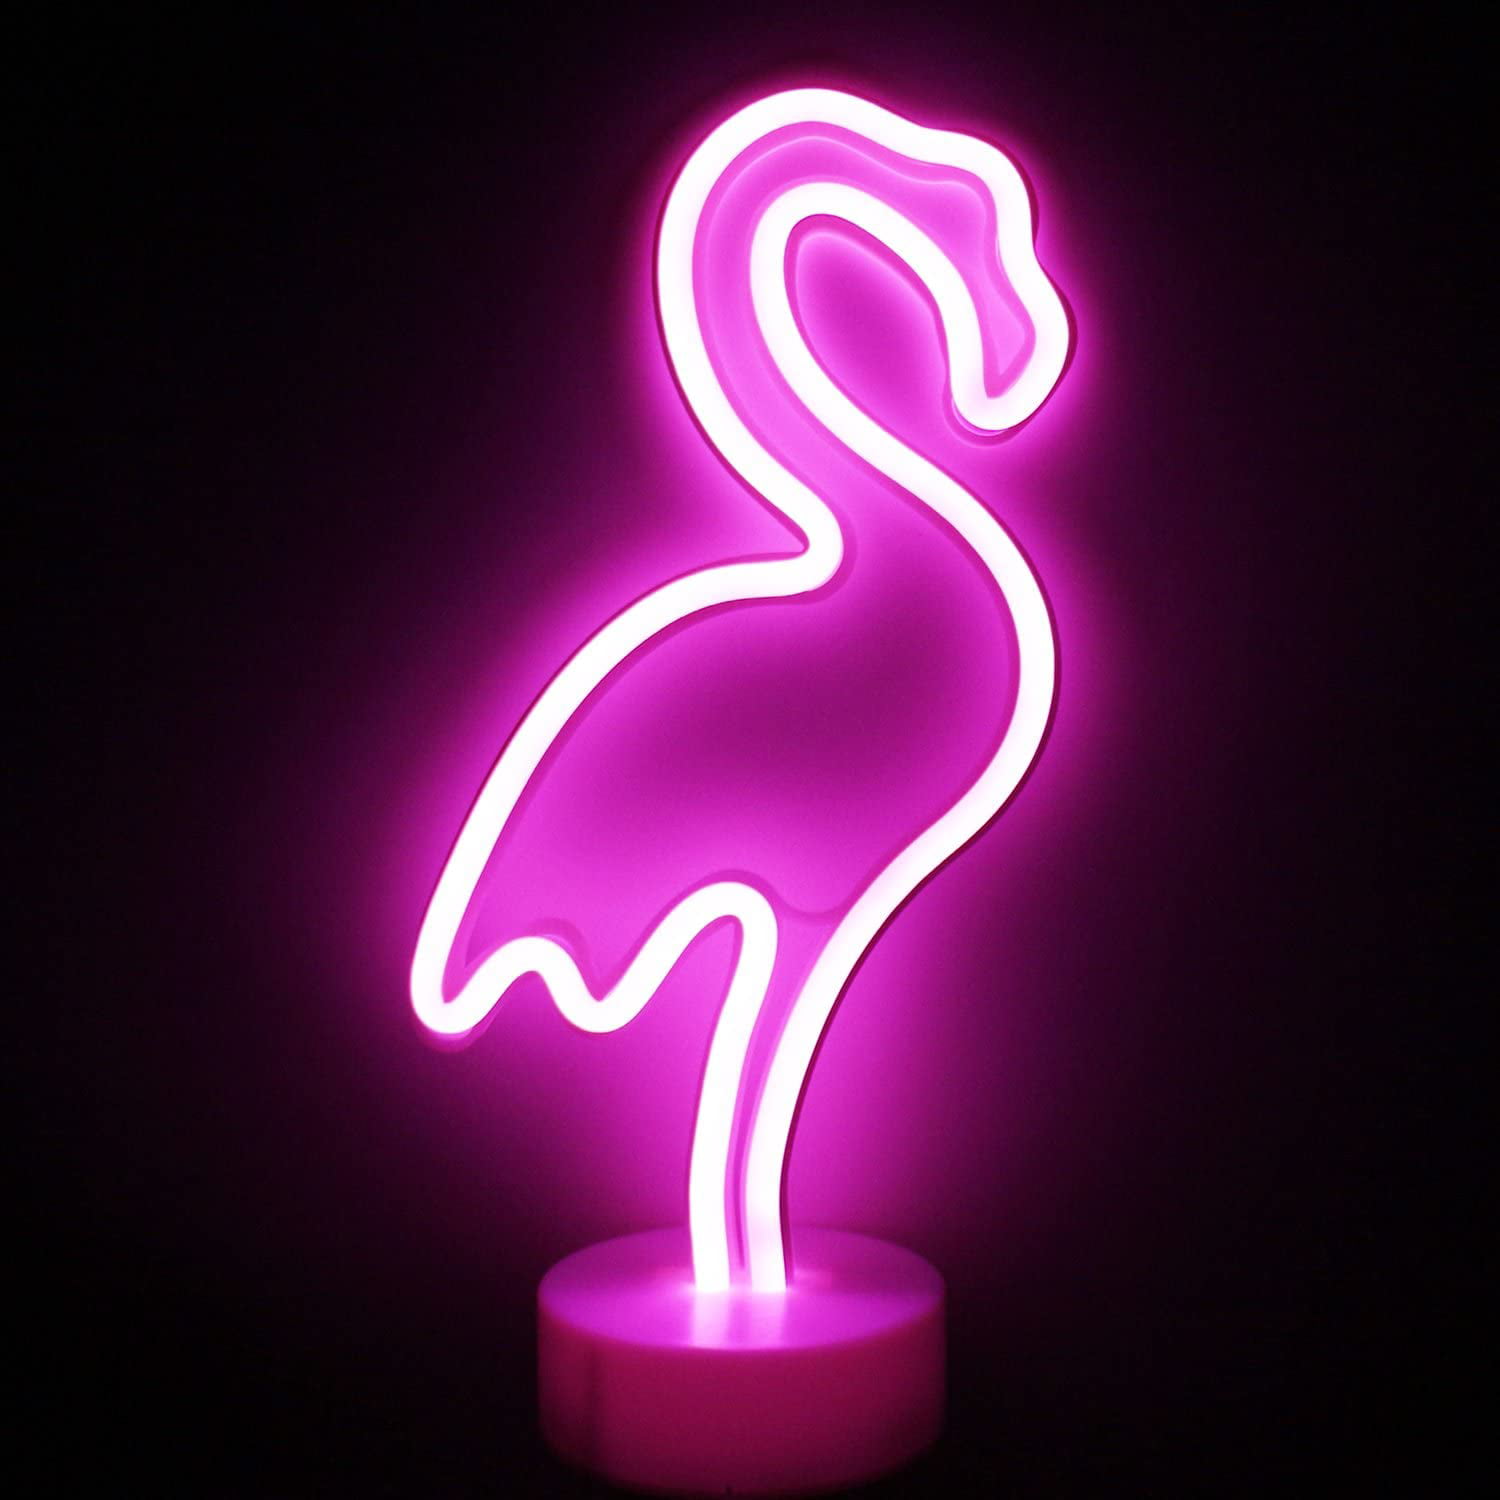  LED  Flamingo Neon  Light  Sign Room Decor Night Lights  